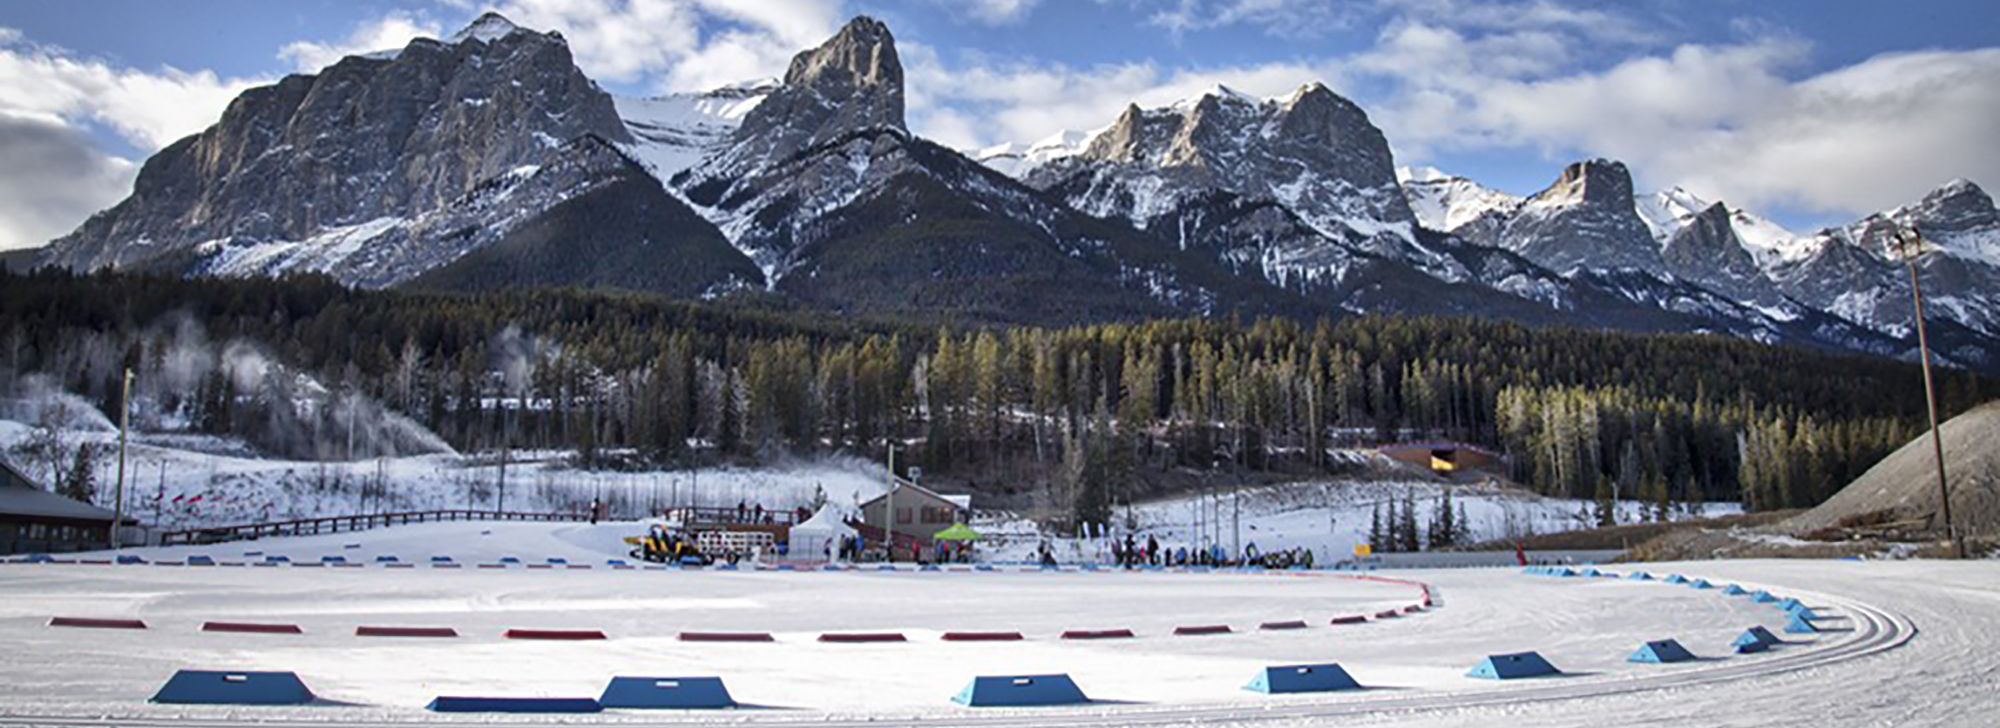 WPNS Ski Courses Canmore Alberta Canada